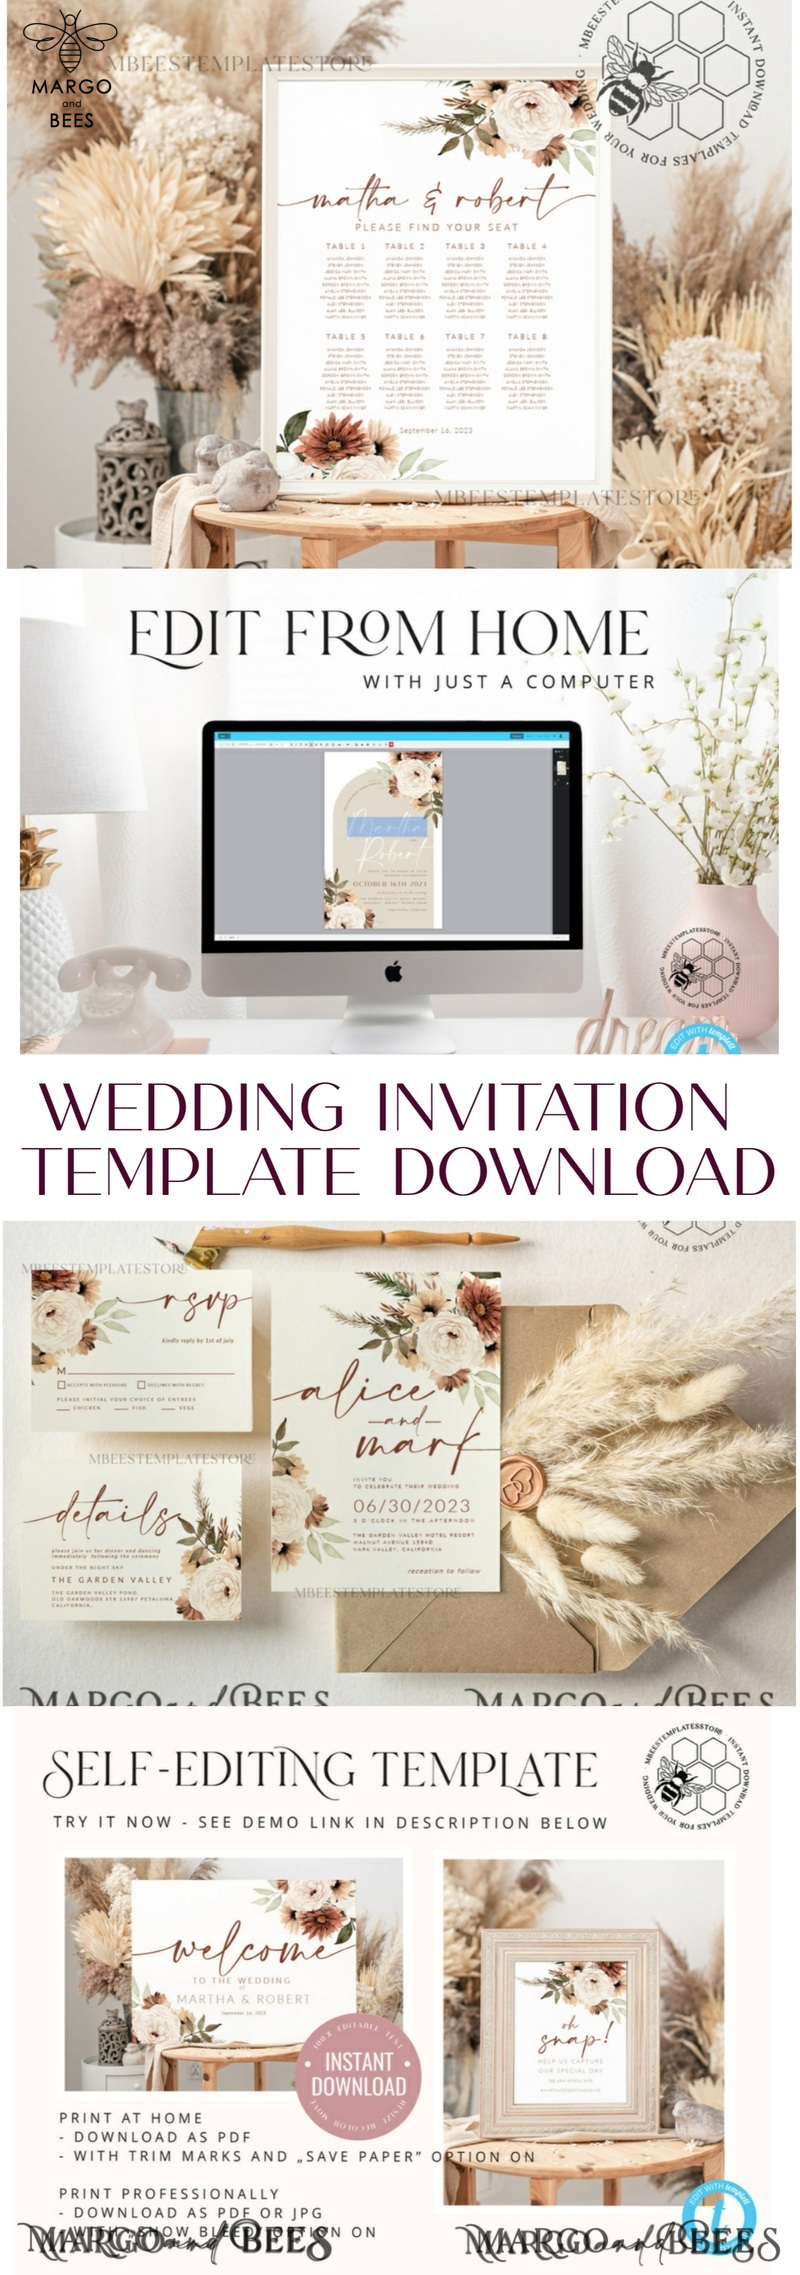 Boho Ivory wedding Invitations Set Template, Instant Download Printable Invites Home Printing, Simple Boho Wedding Invitation Card Set-8